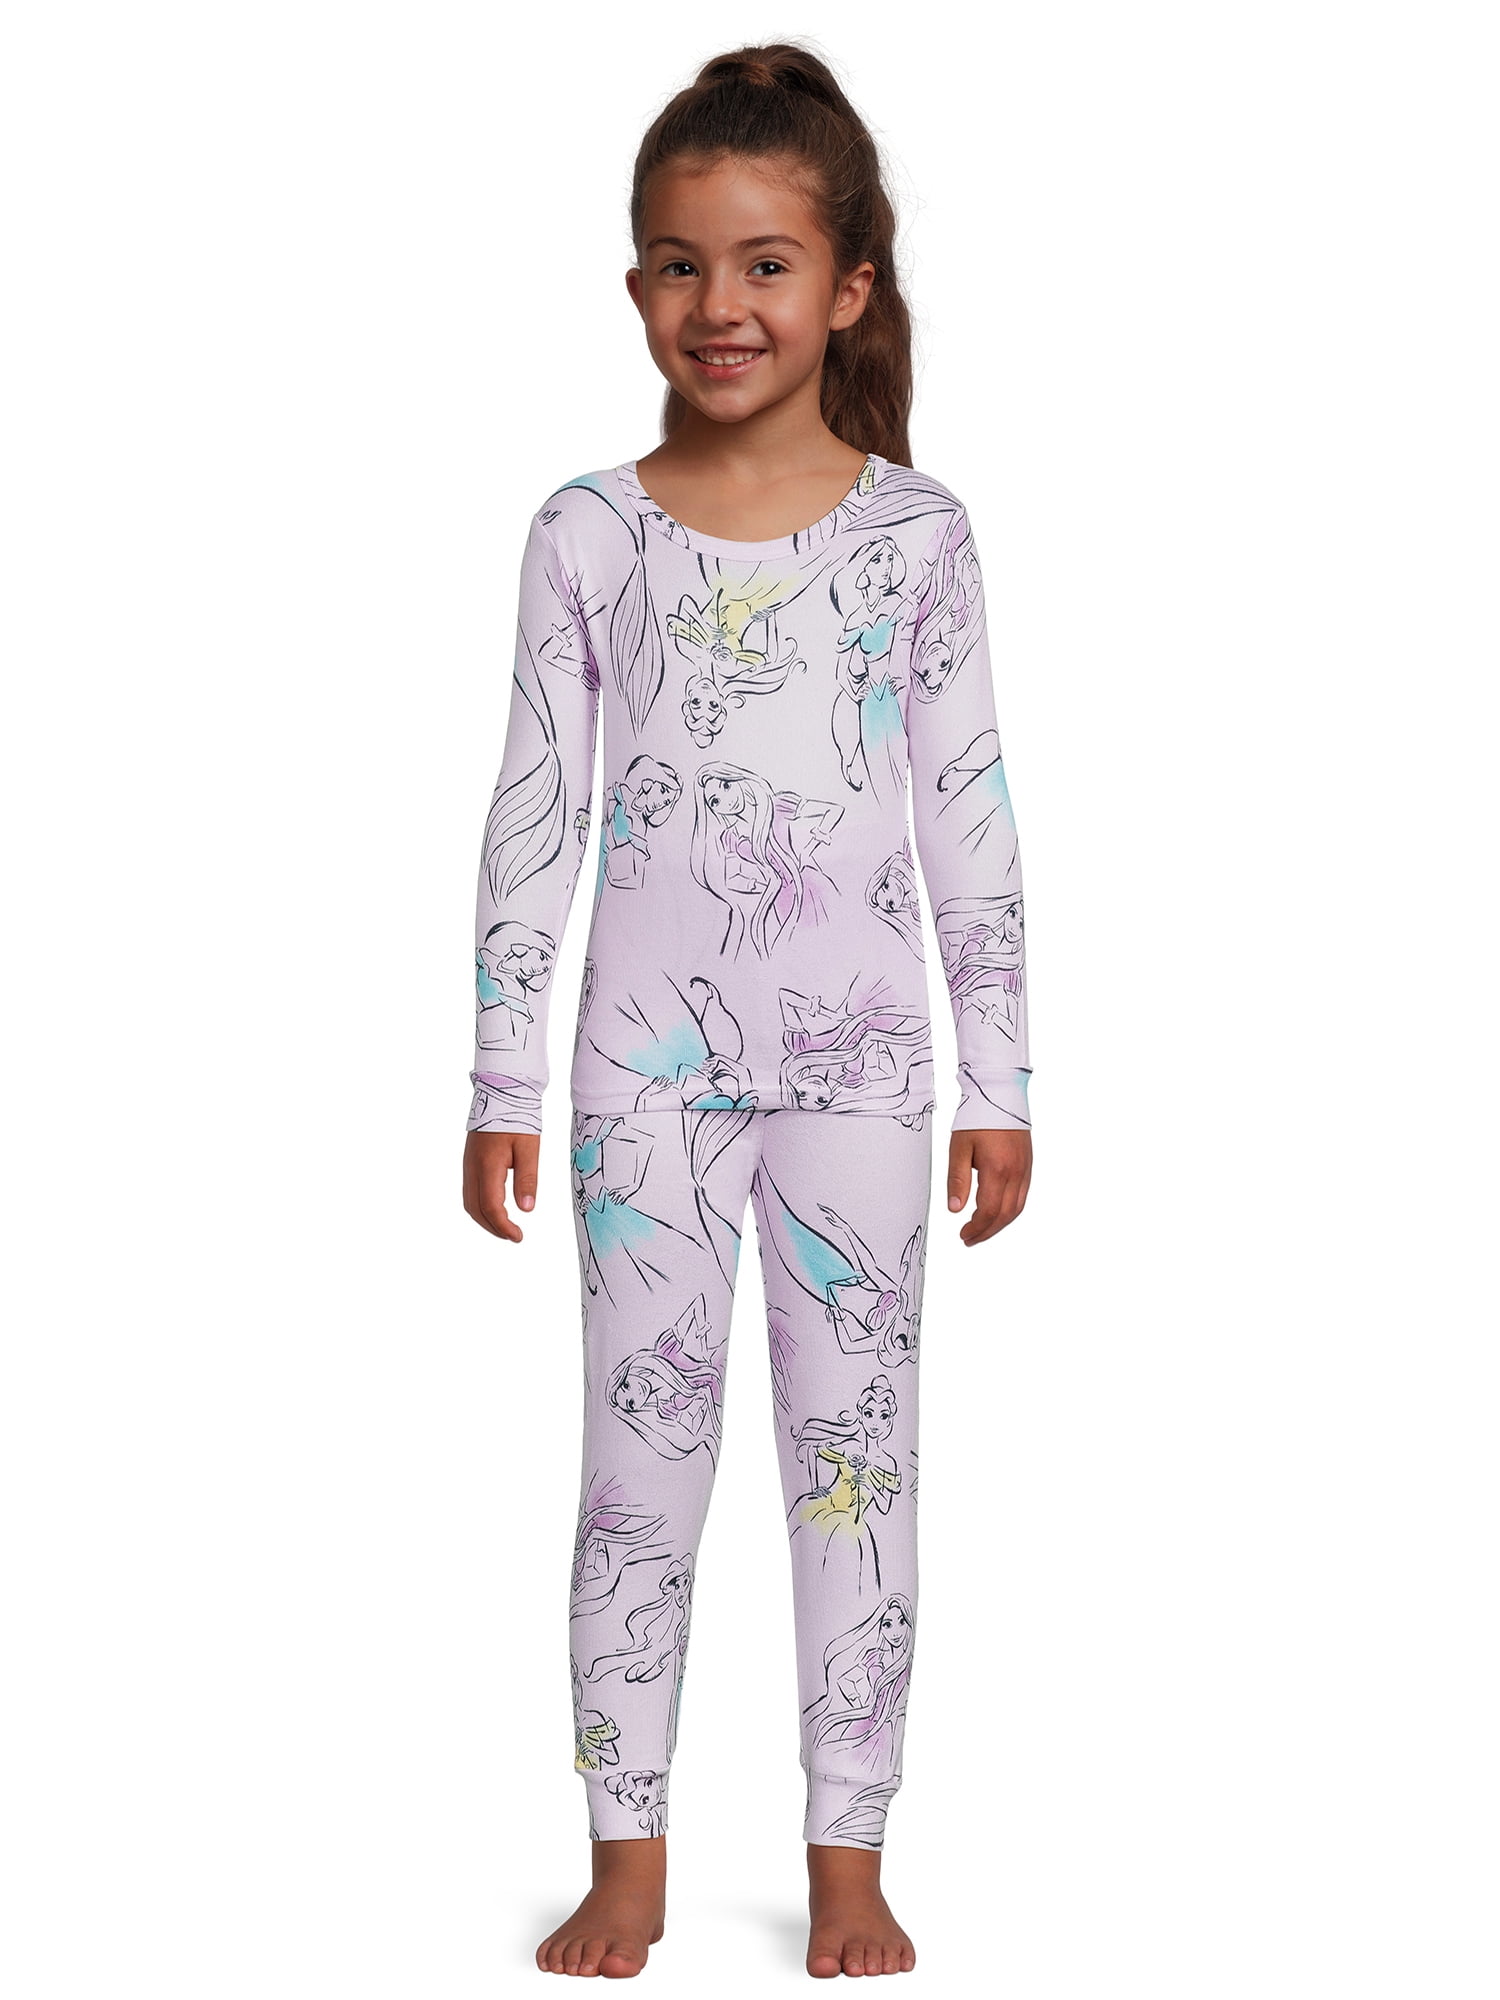 Disney Princess Baby Girl 2pcs Character Print Long-sleeve Top and Leggings  Set